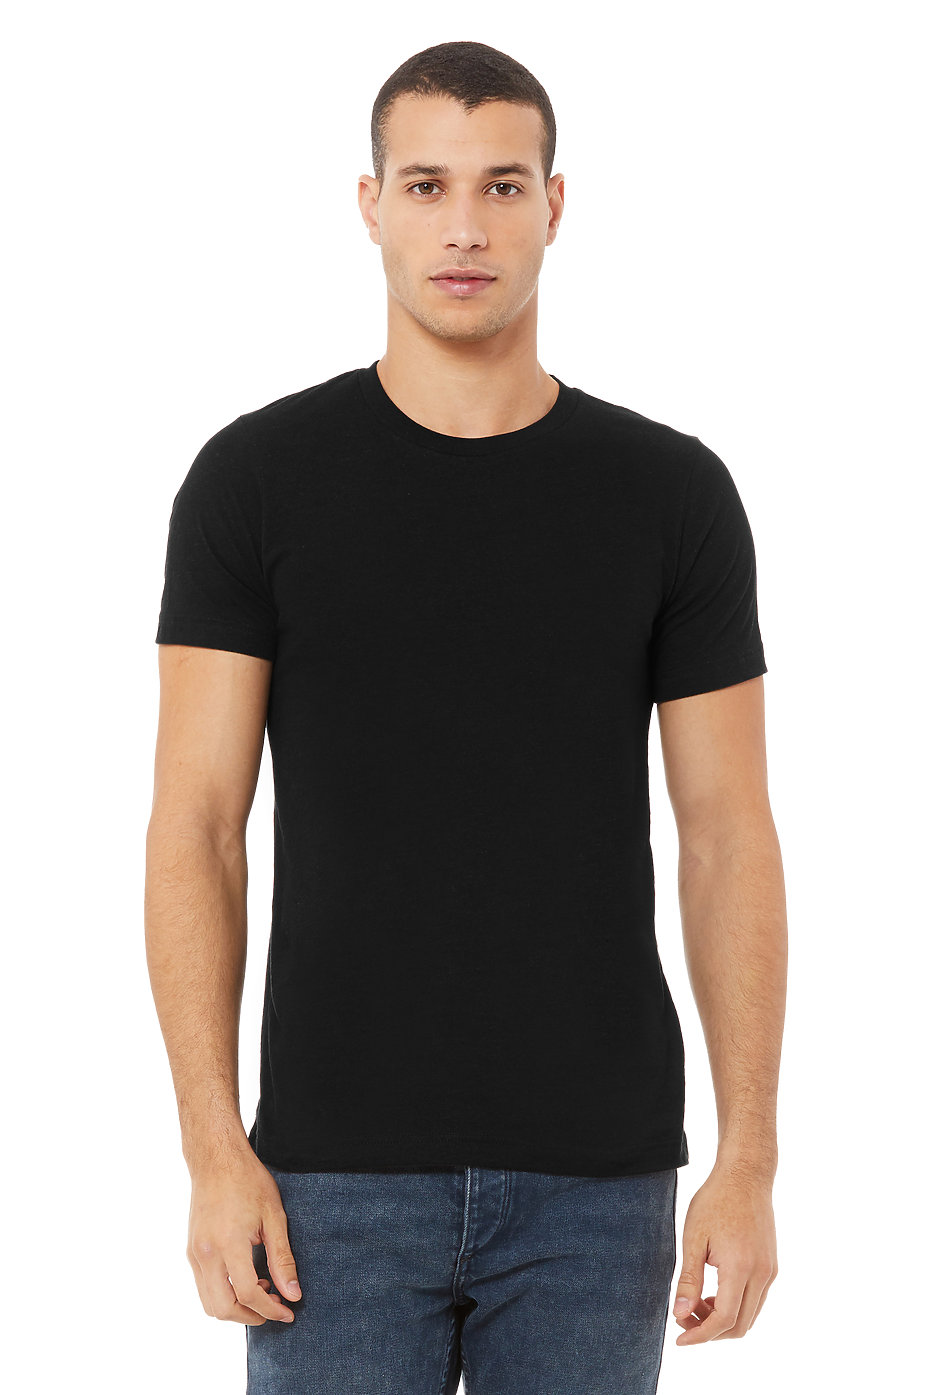 Heathered Shirt | Mens Wholesale Clothing | Heather T Shirts | Blank T ...